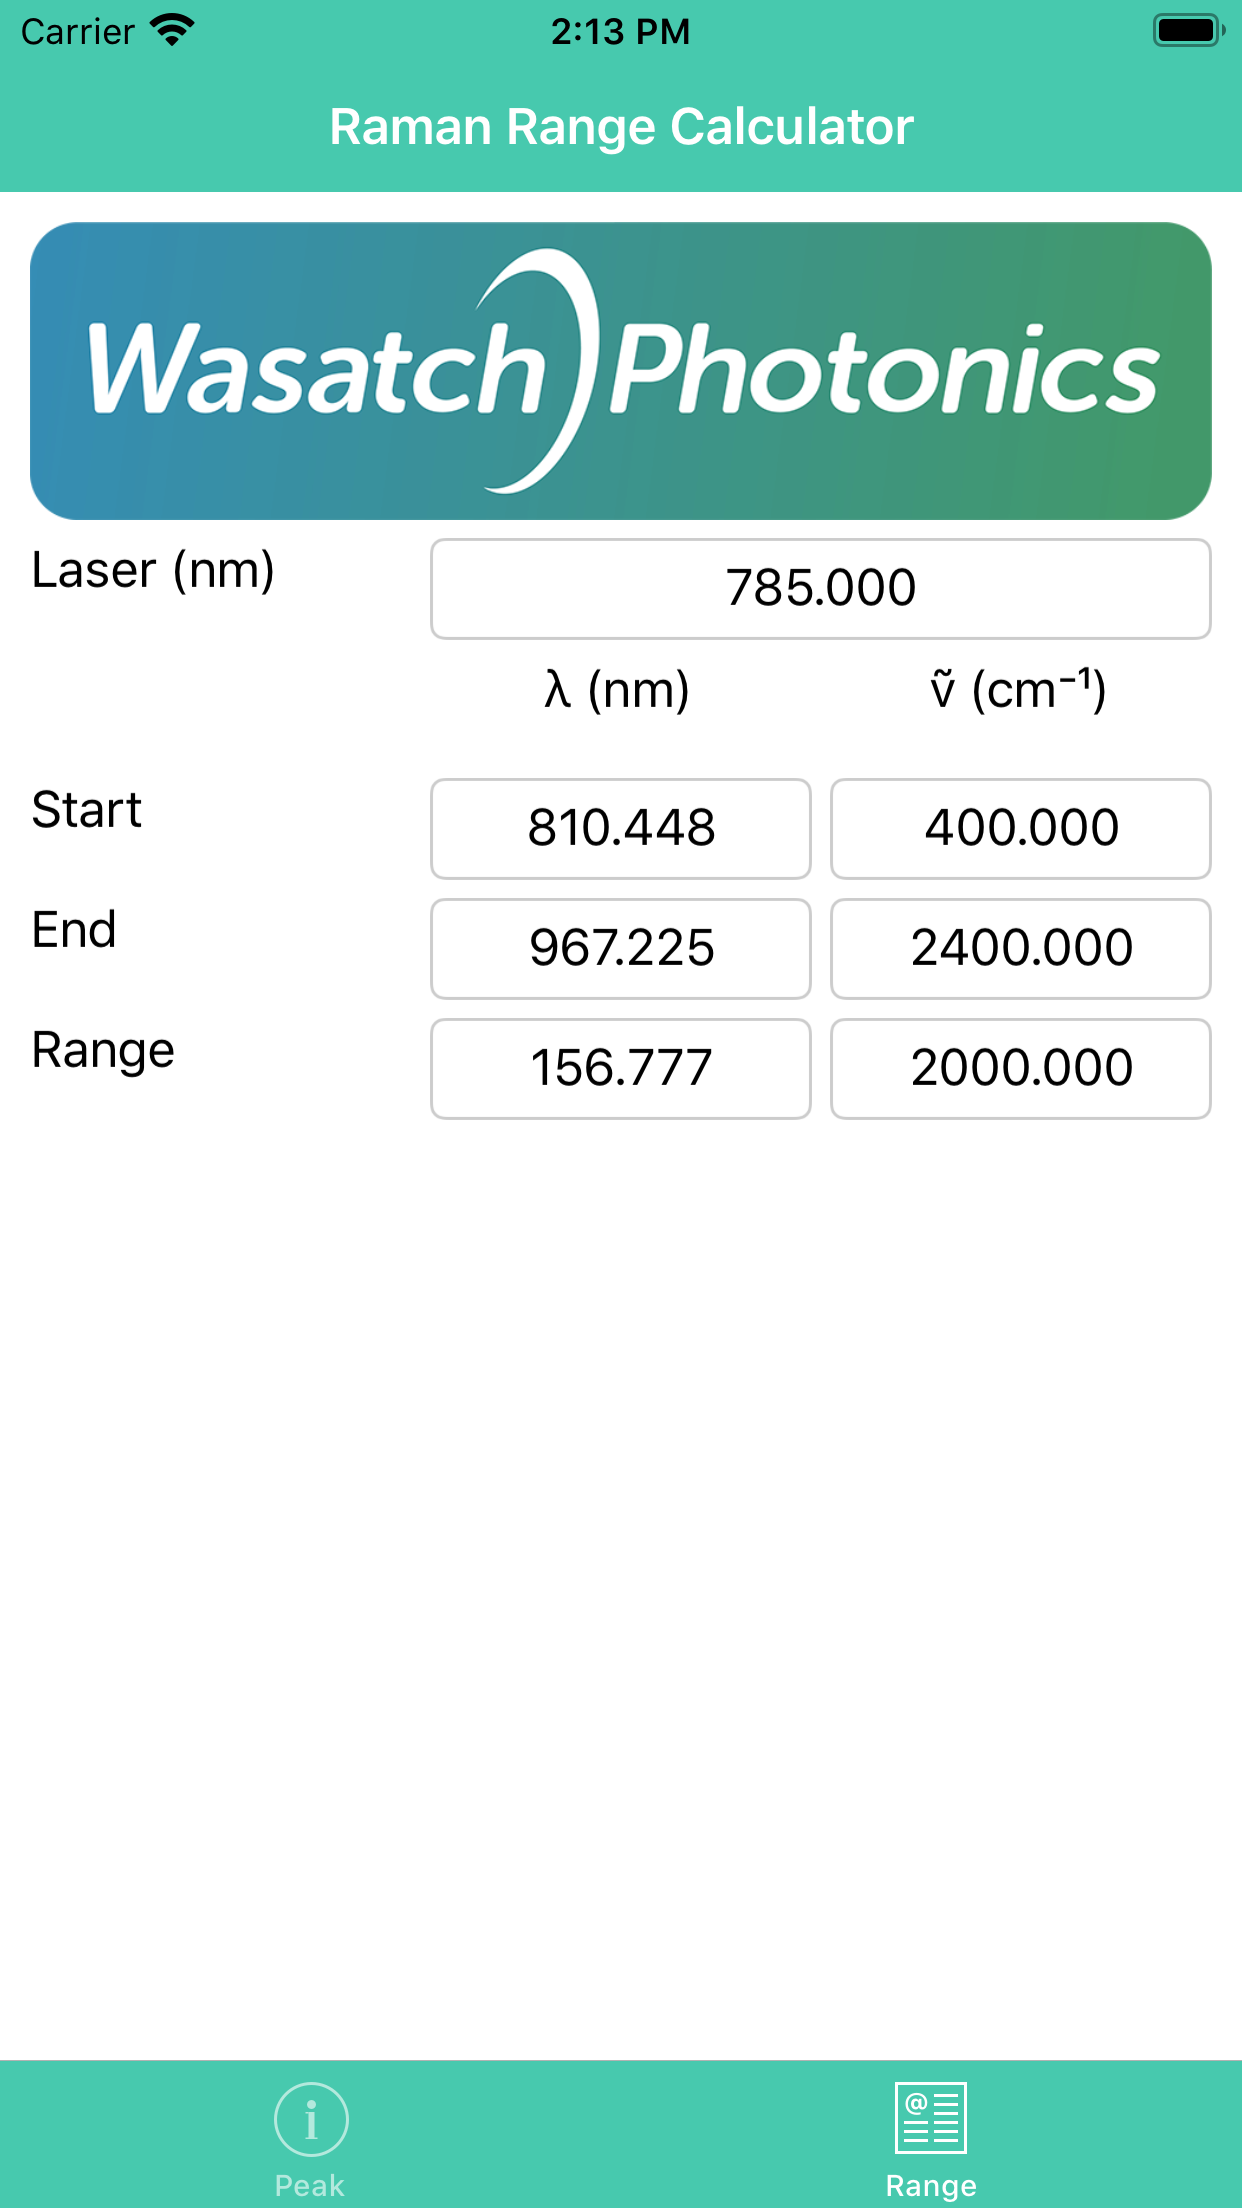 Raman shift calculator app for iPhone